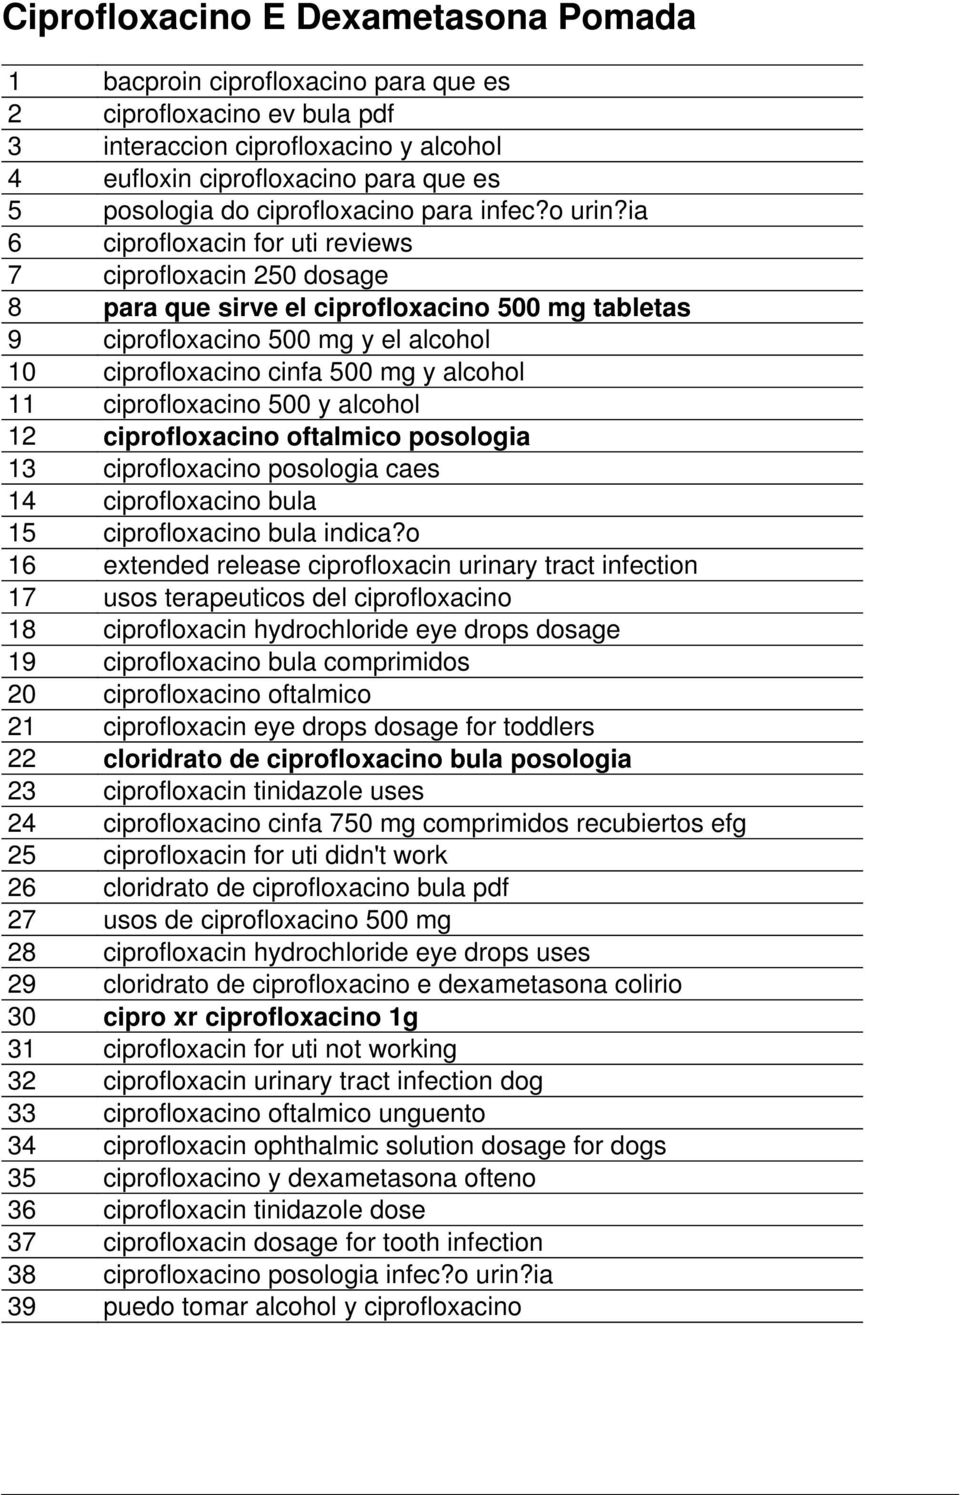 ia 6 ciprofloxacin for uti reviews 7 ciprofloxacin 250 dosage 8 para que sirve el ciprofloxacino 500 mg tabletas 9 ciprofloxacino 500 mg y el alcohol 10 ciprofloxacino cinfa 500 mg y alcohol 11